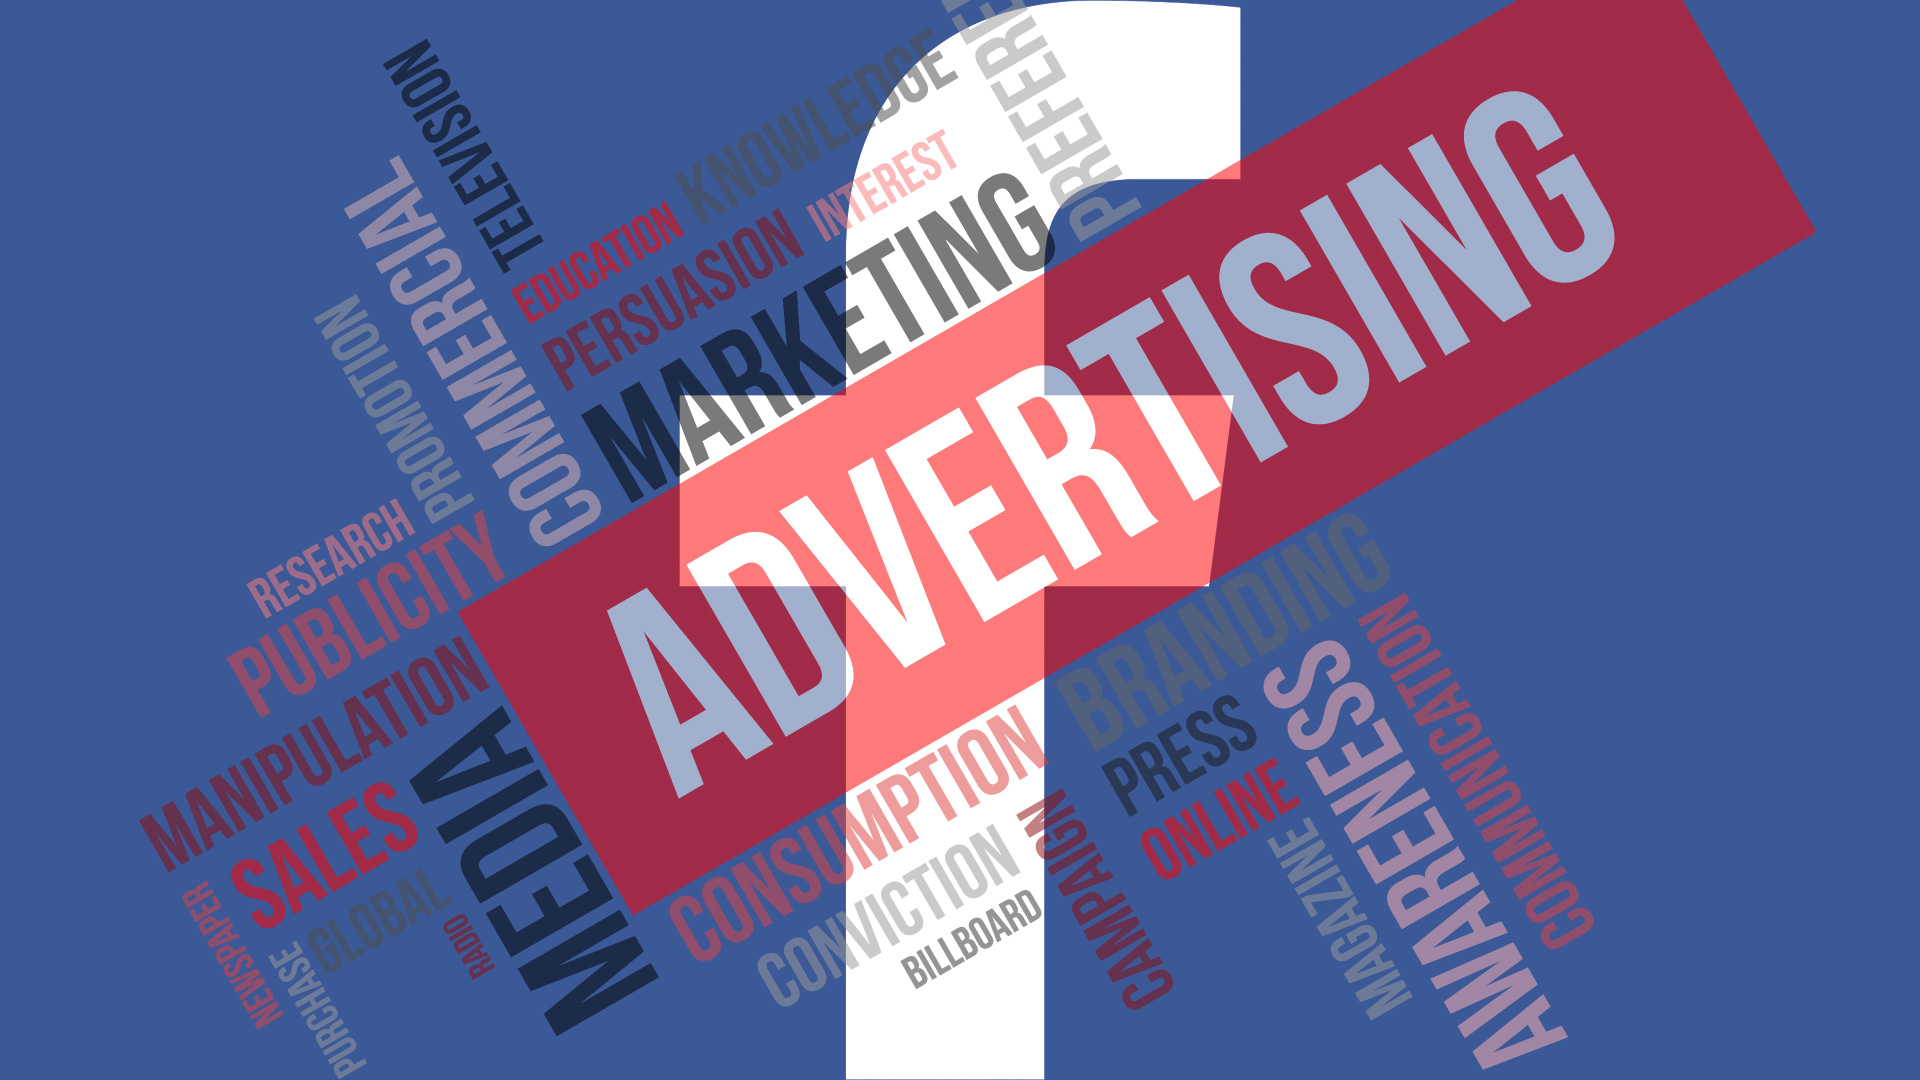 Fuqua Consulting Marketing and Advertising